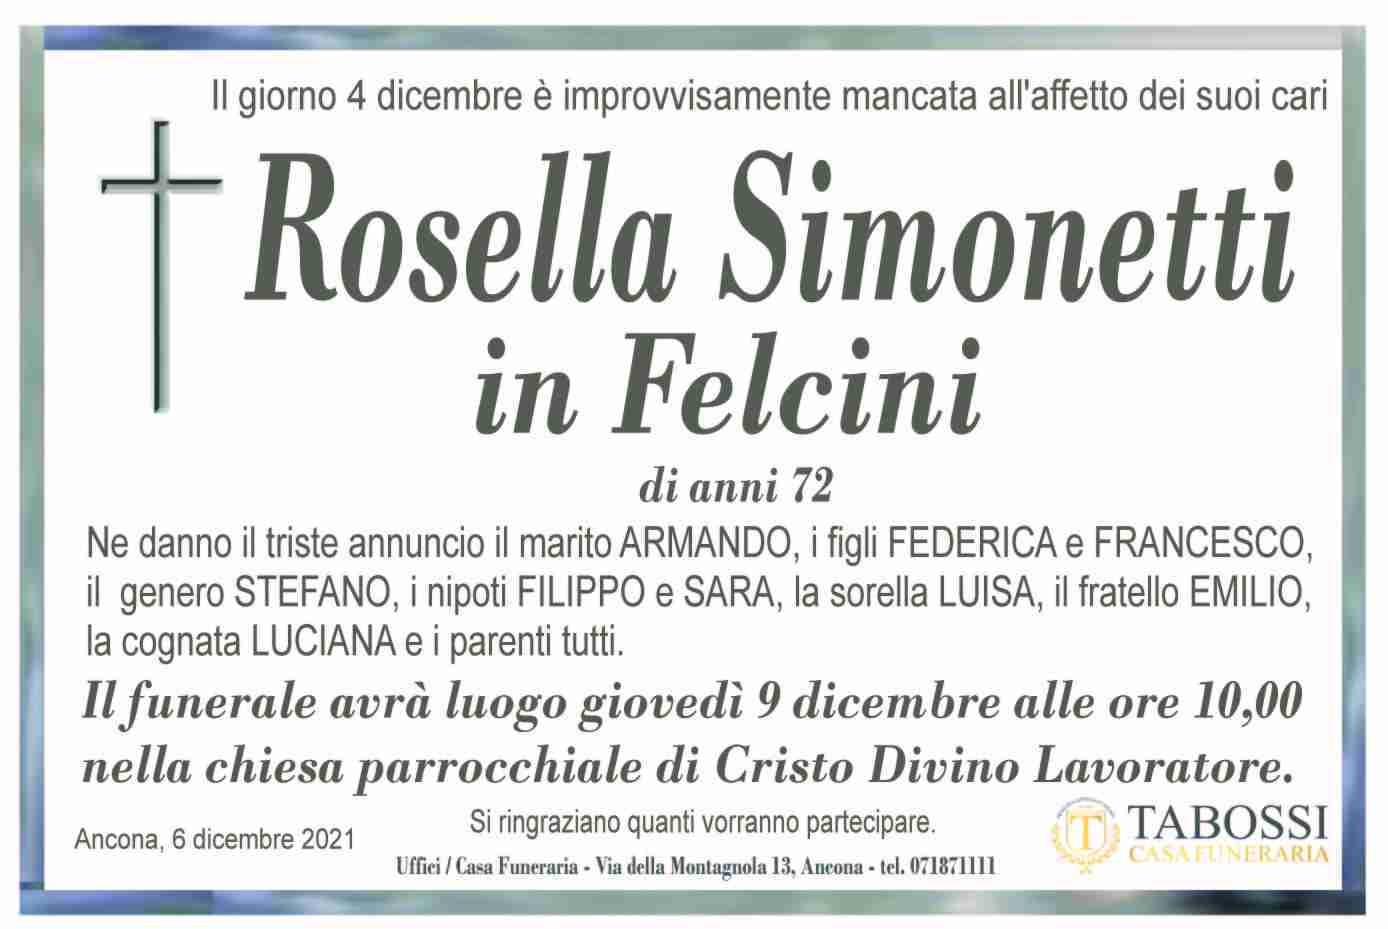 Rosella Simonetti